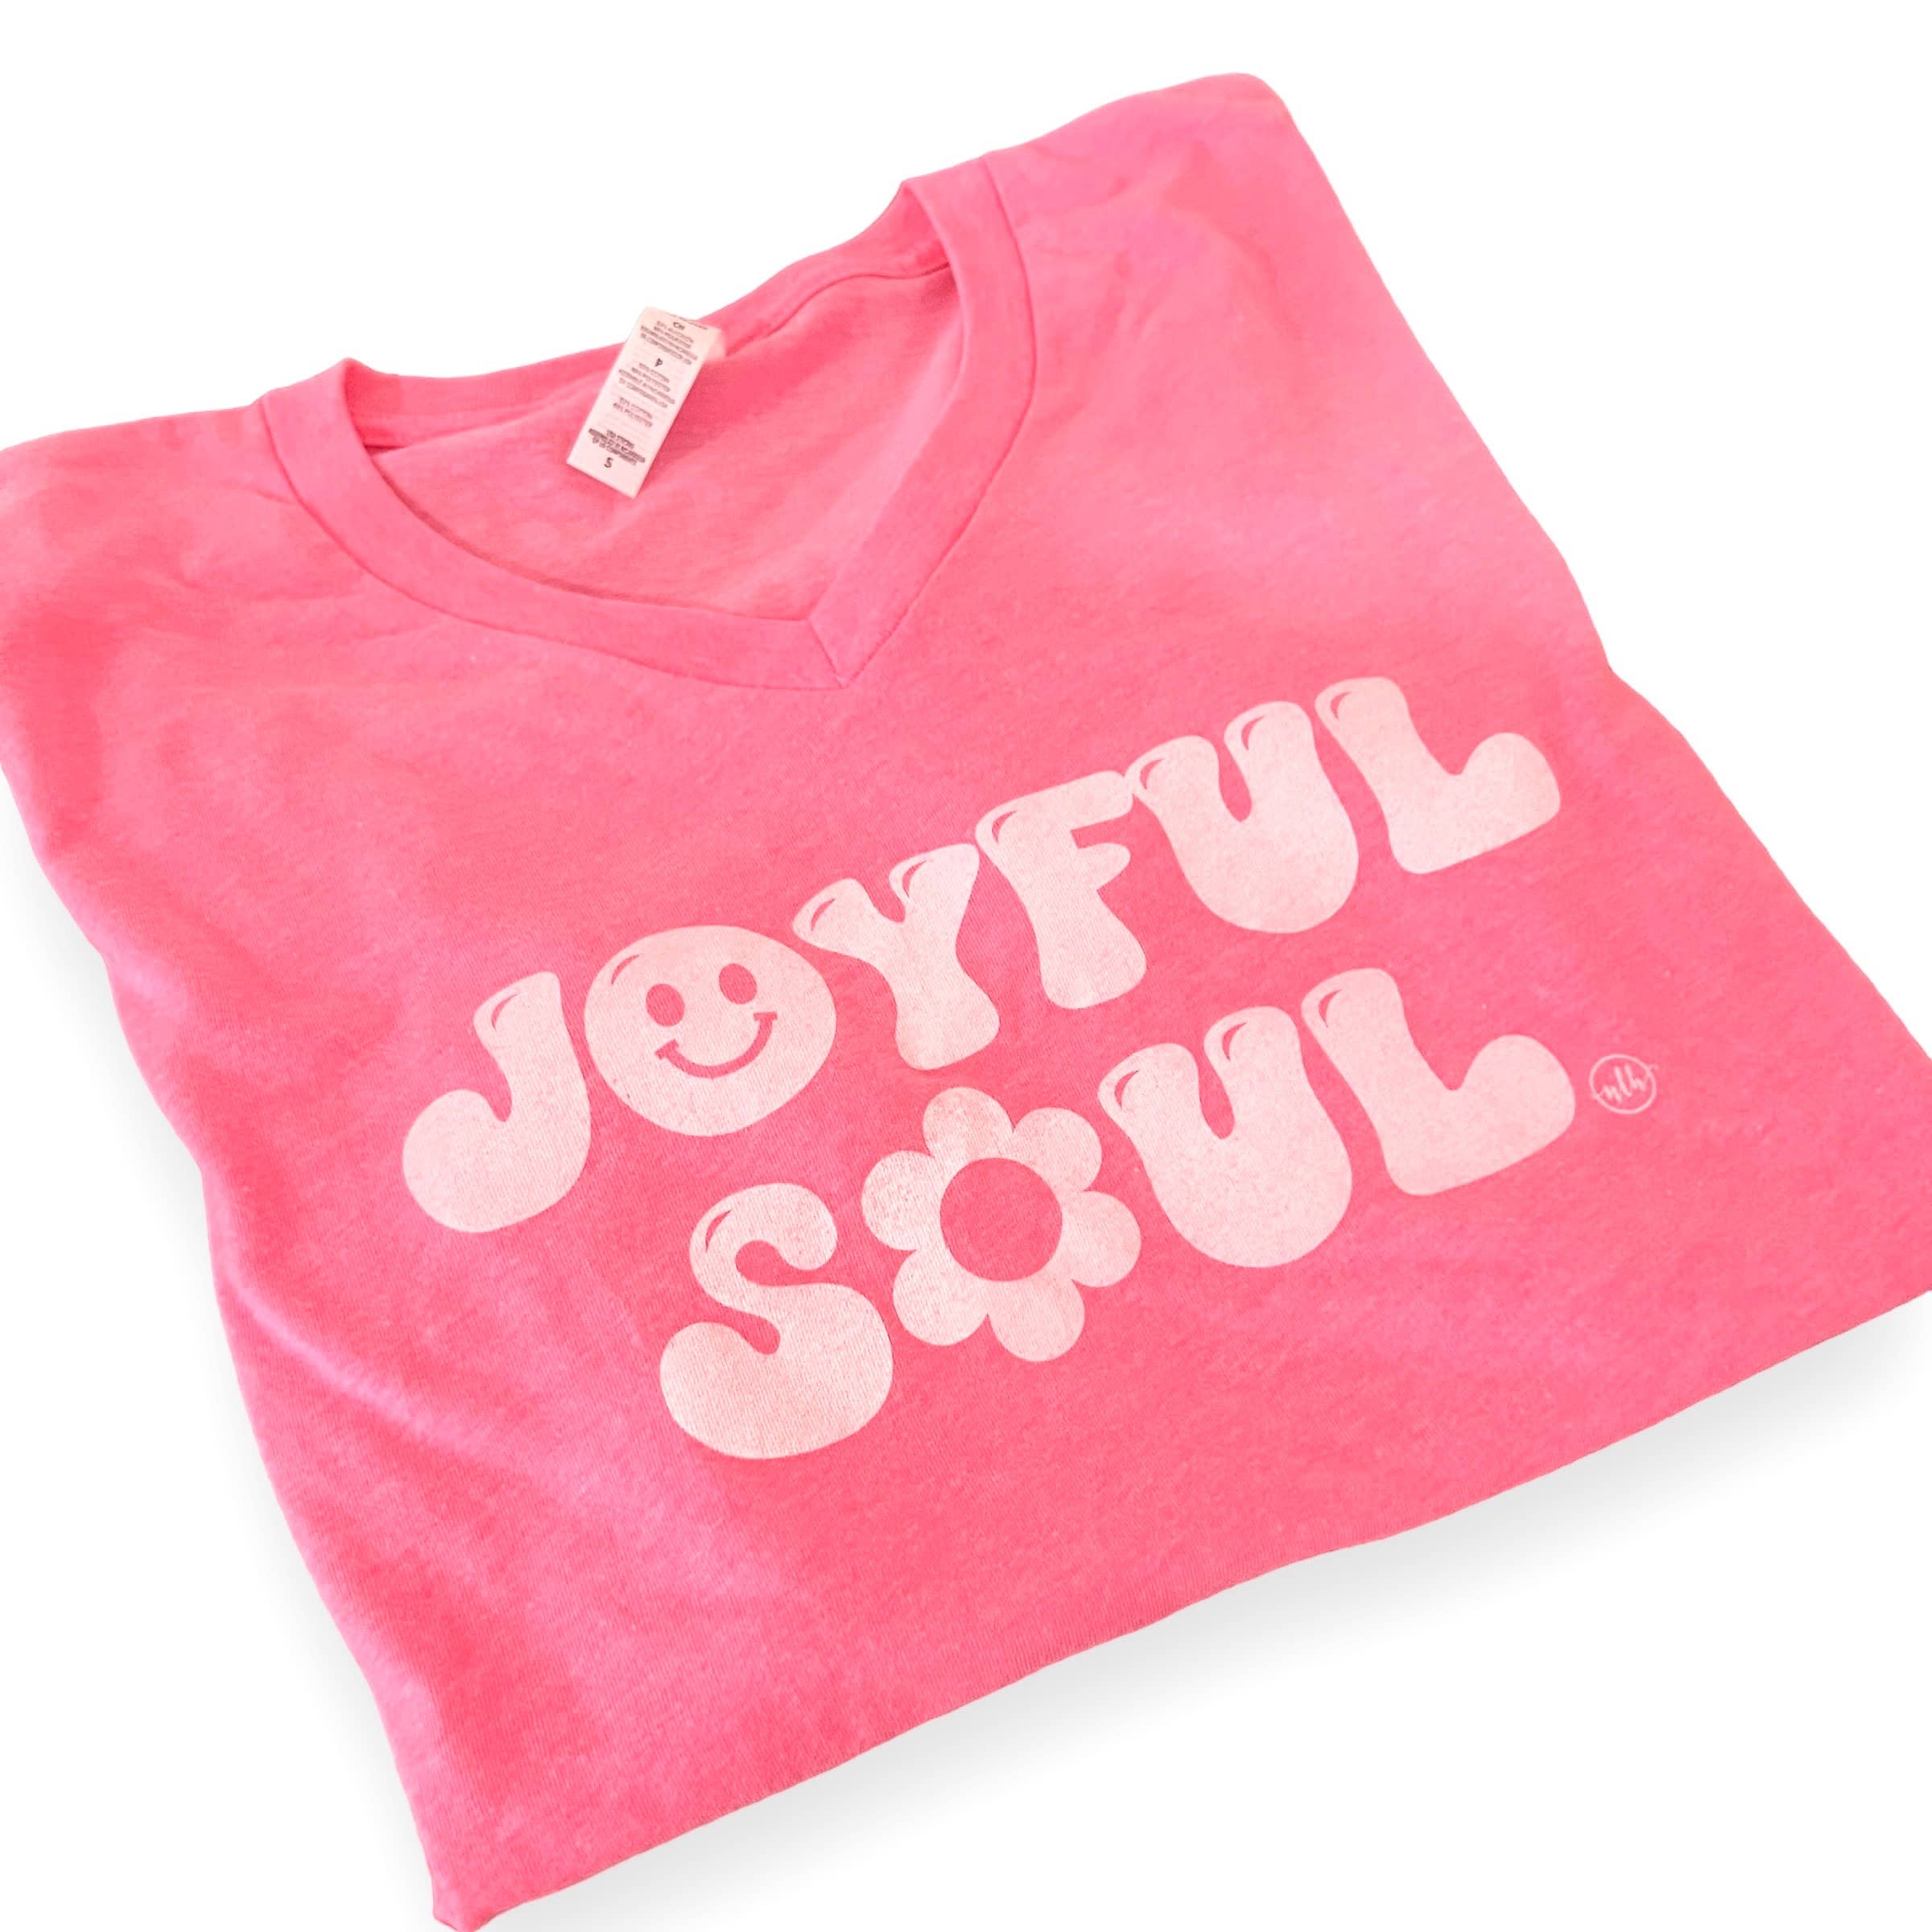 Wholesale Joyful Soul Graphic Tee for your store - Faire